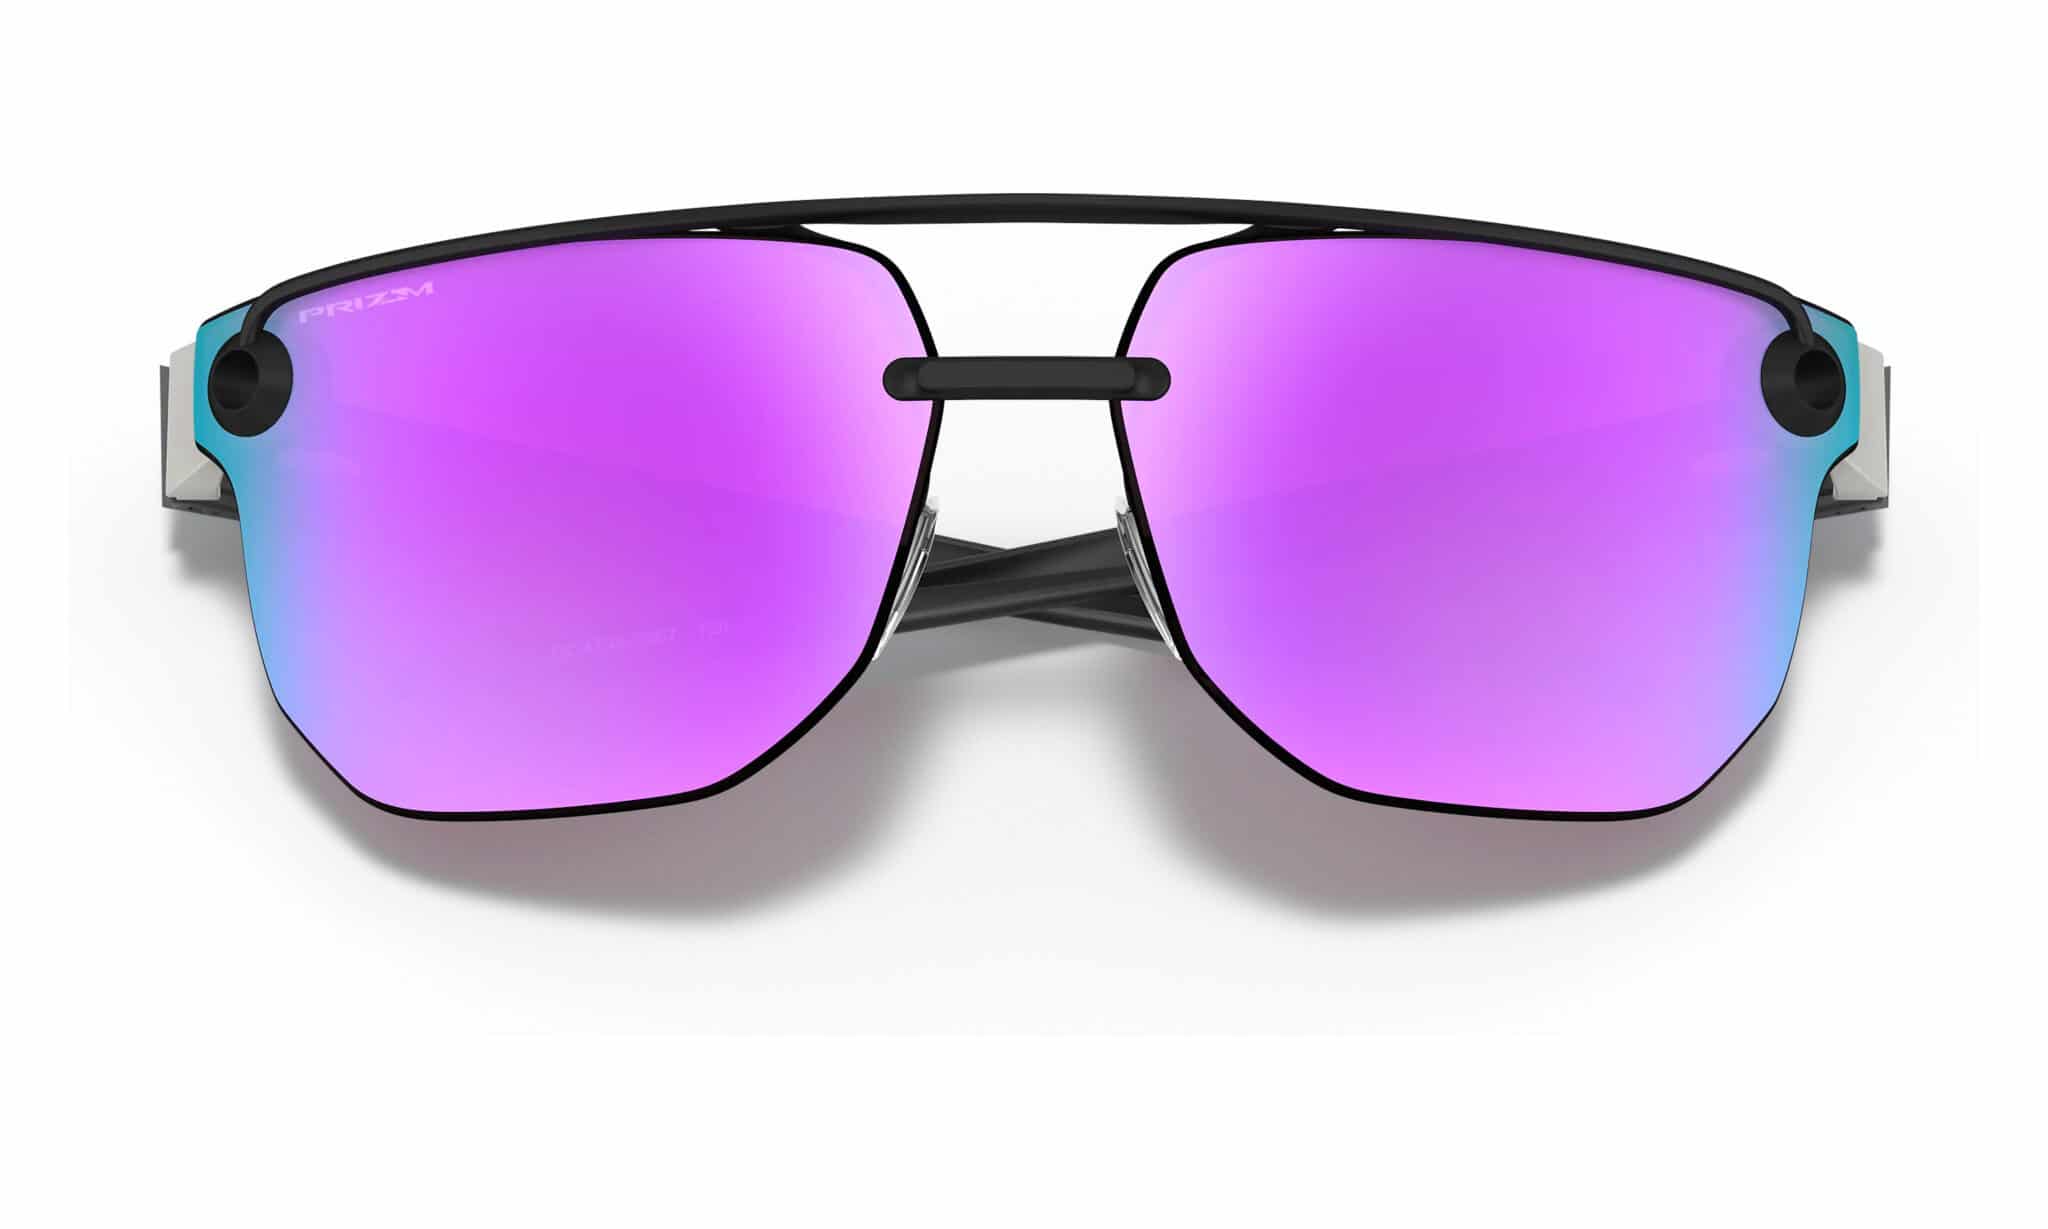 Bad luck news Western Oakley Prizm Violet Lens Review | Oakley Forum